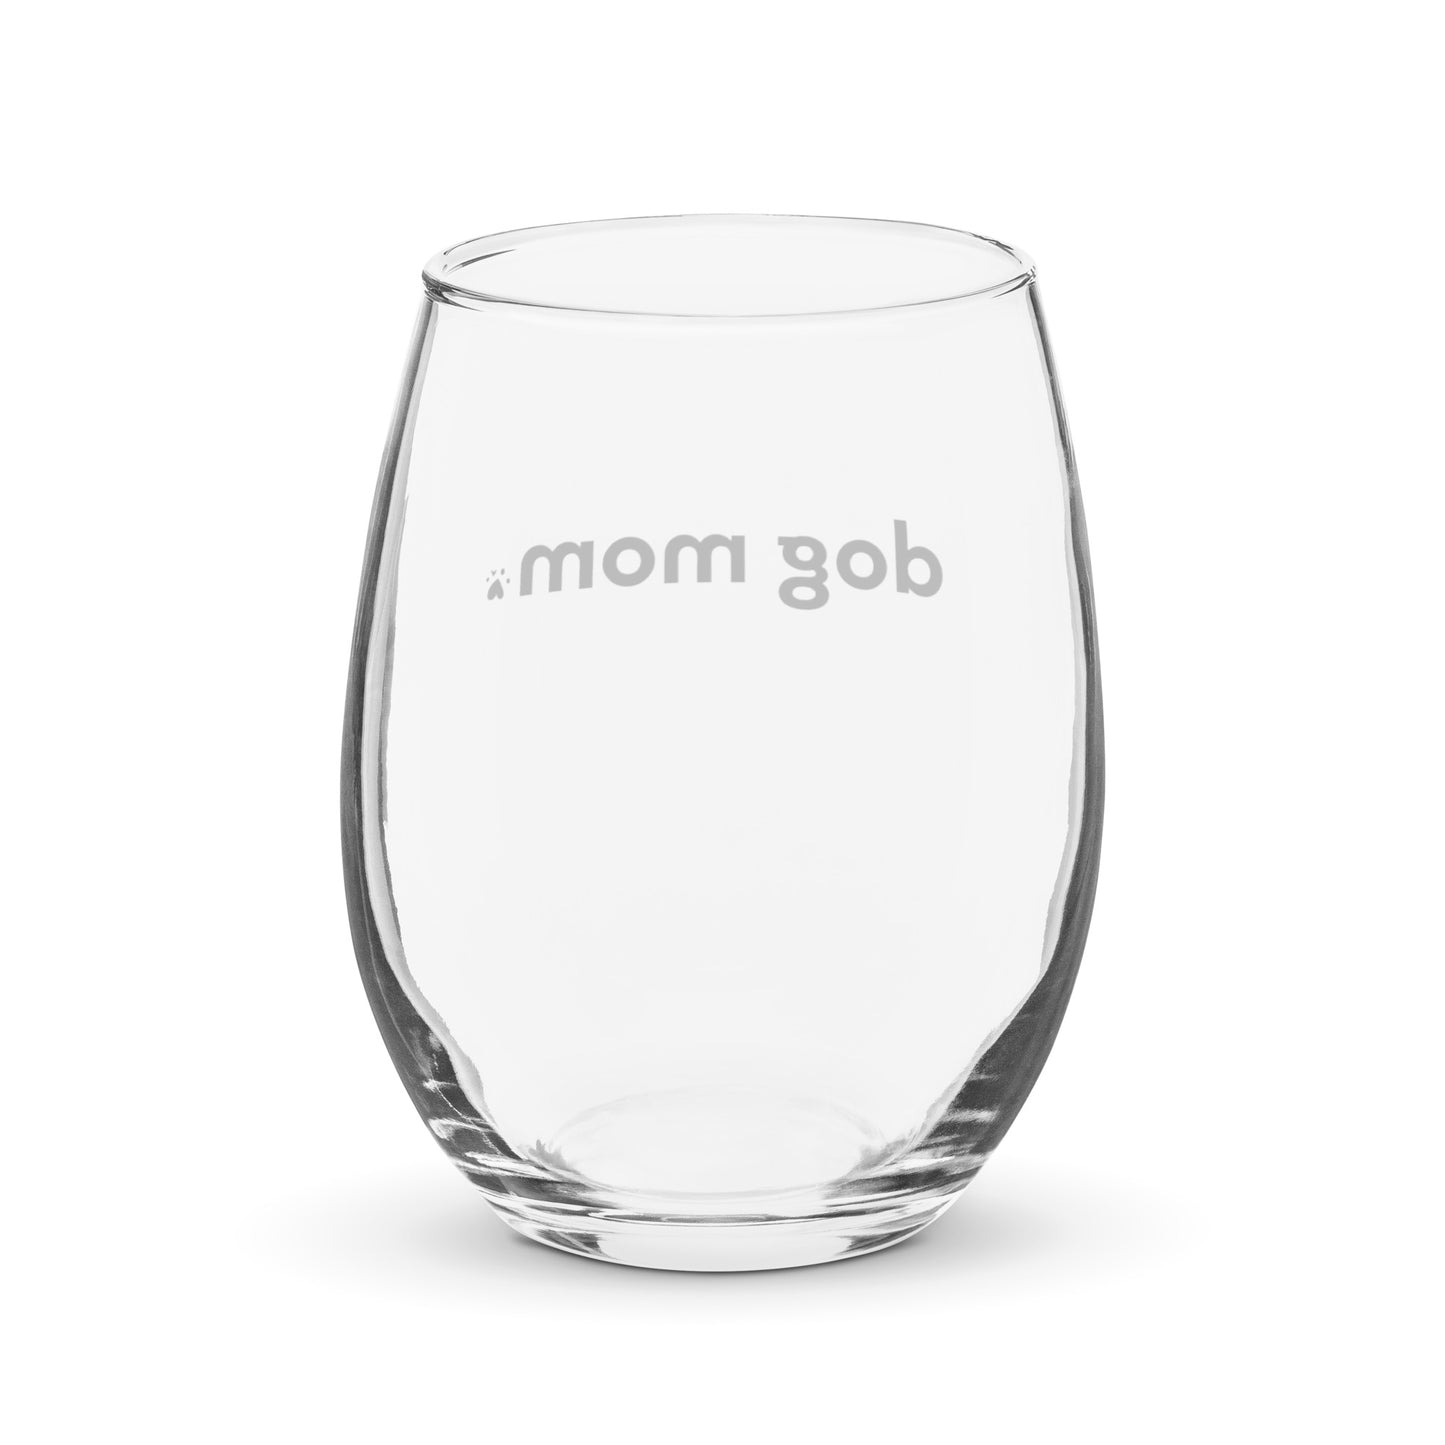 Dog Mom - Black - Rounded Glass